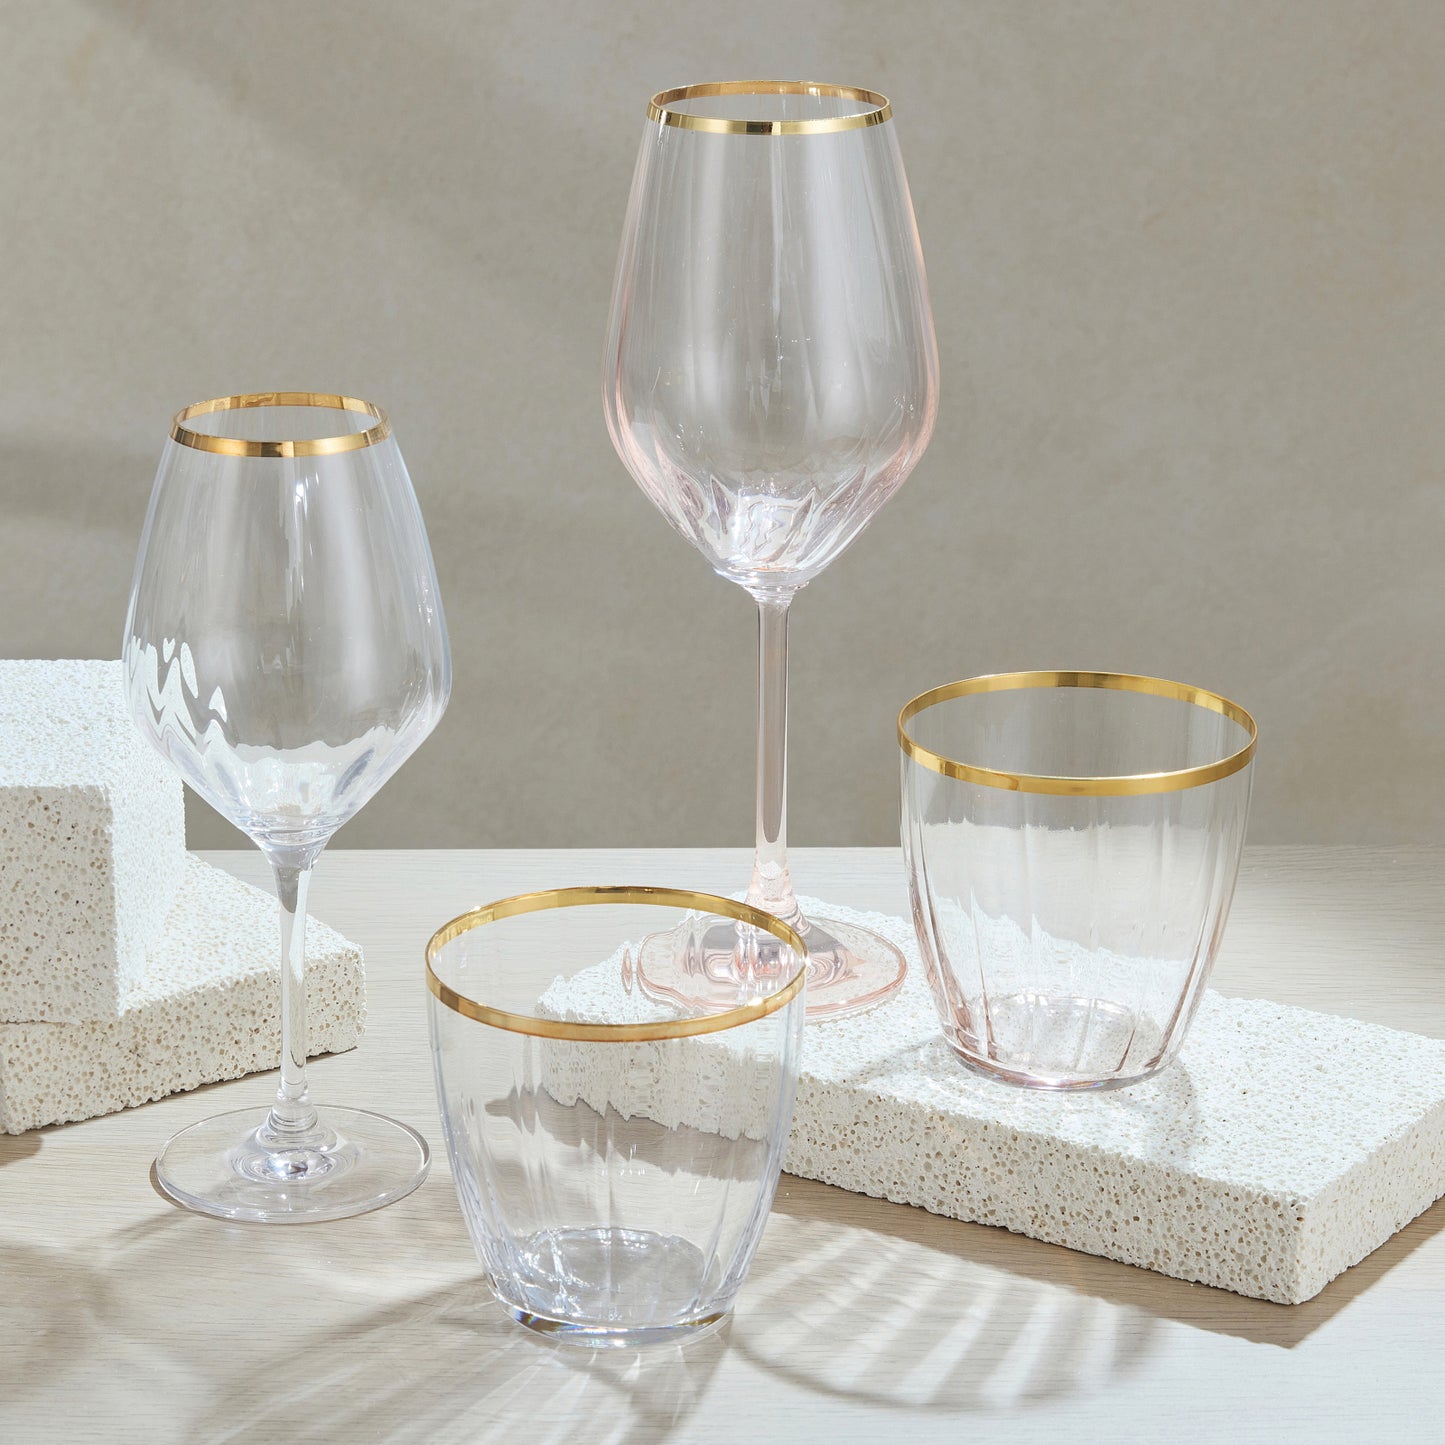 Set of 6 Soho Wine Glass - Clear